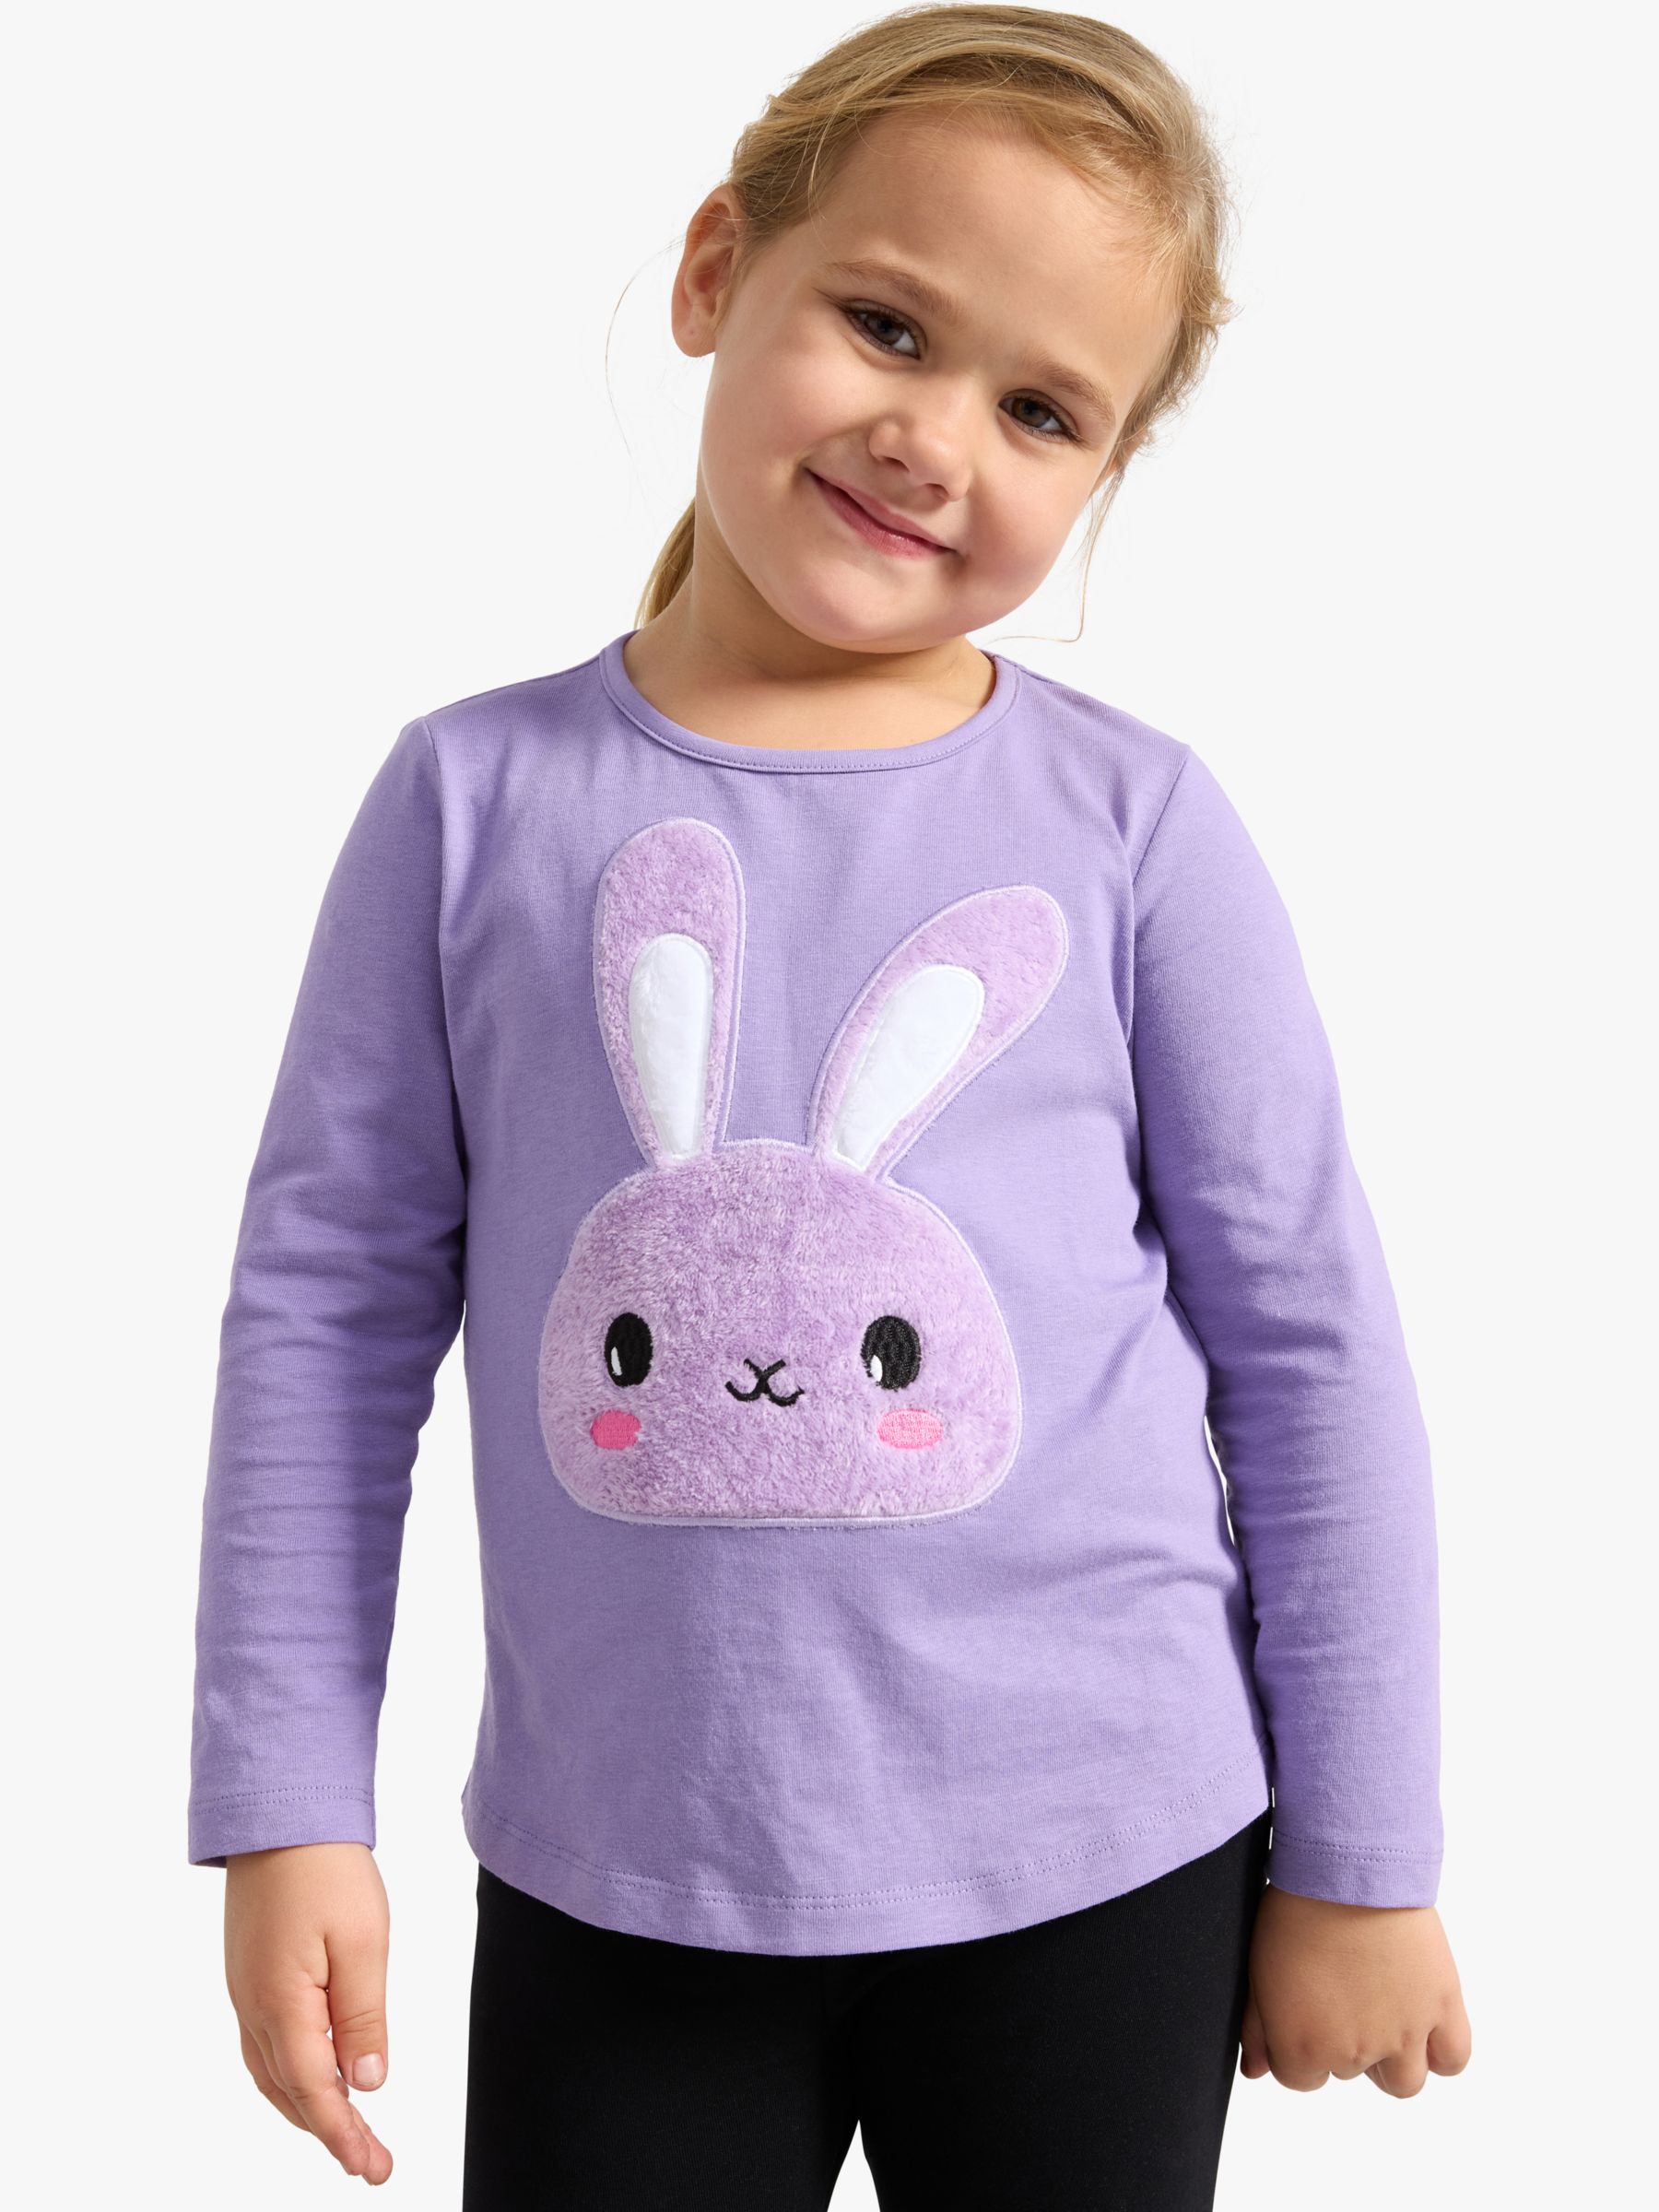 Buy Lindex Kids' Rabbit Applique Long Sleeve Top, Light Dusty Lilac Online at johnlewis.com